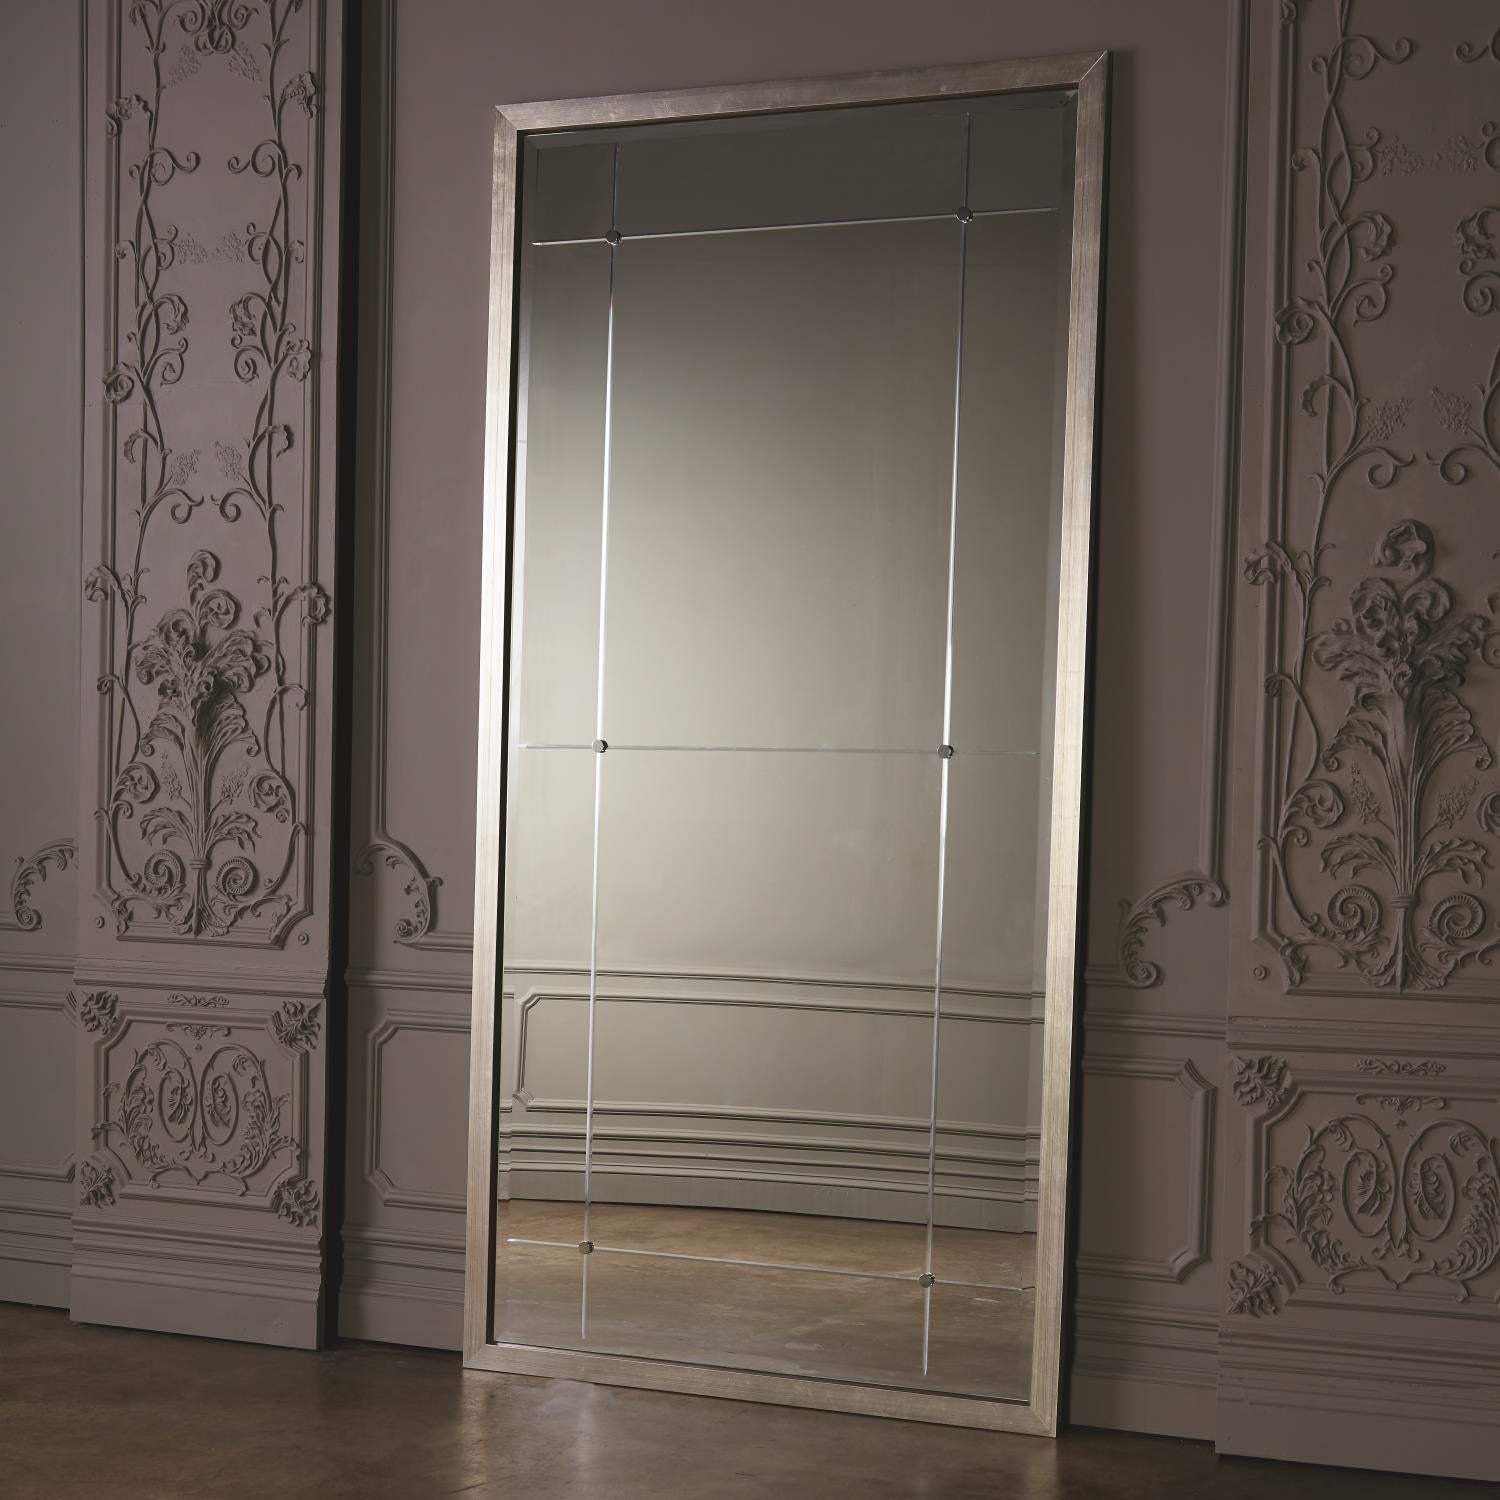 Beaumont Floor Mirror - Silver Leaf - Grats Decor Interior Design & Build Inc.